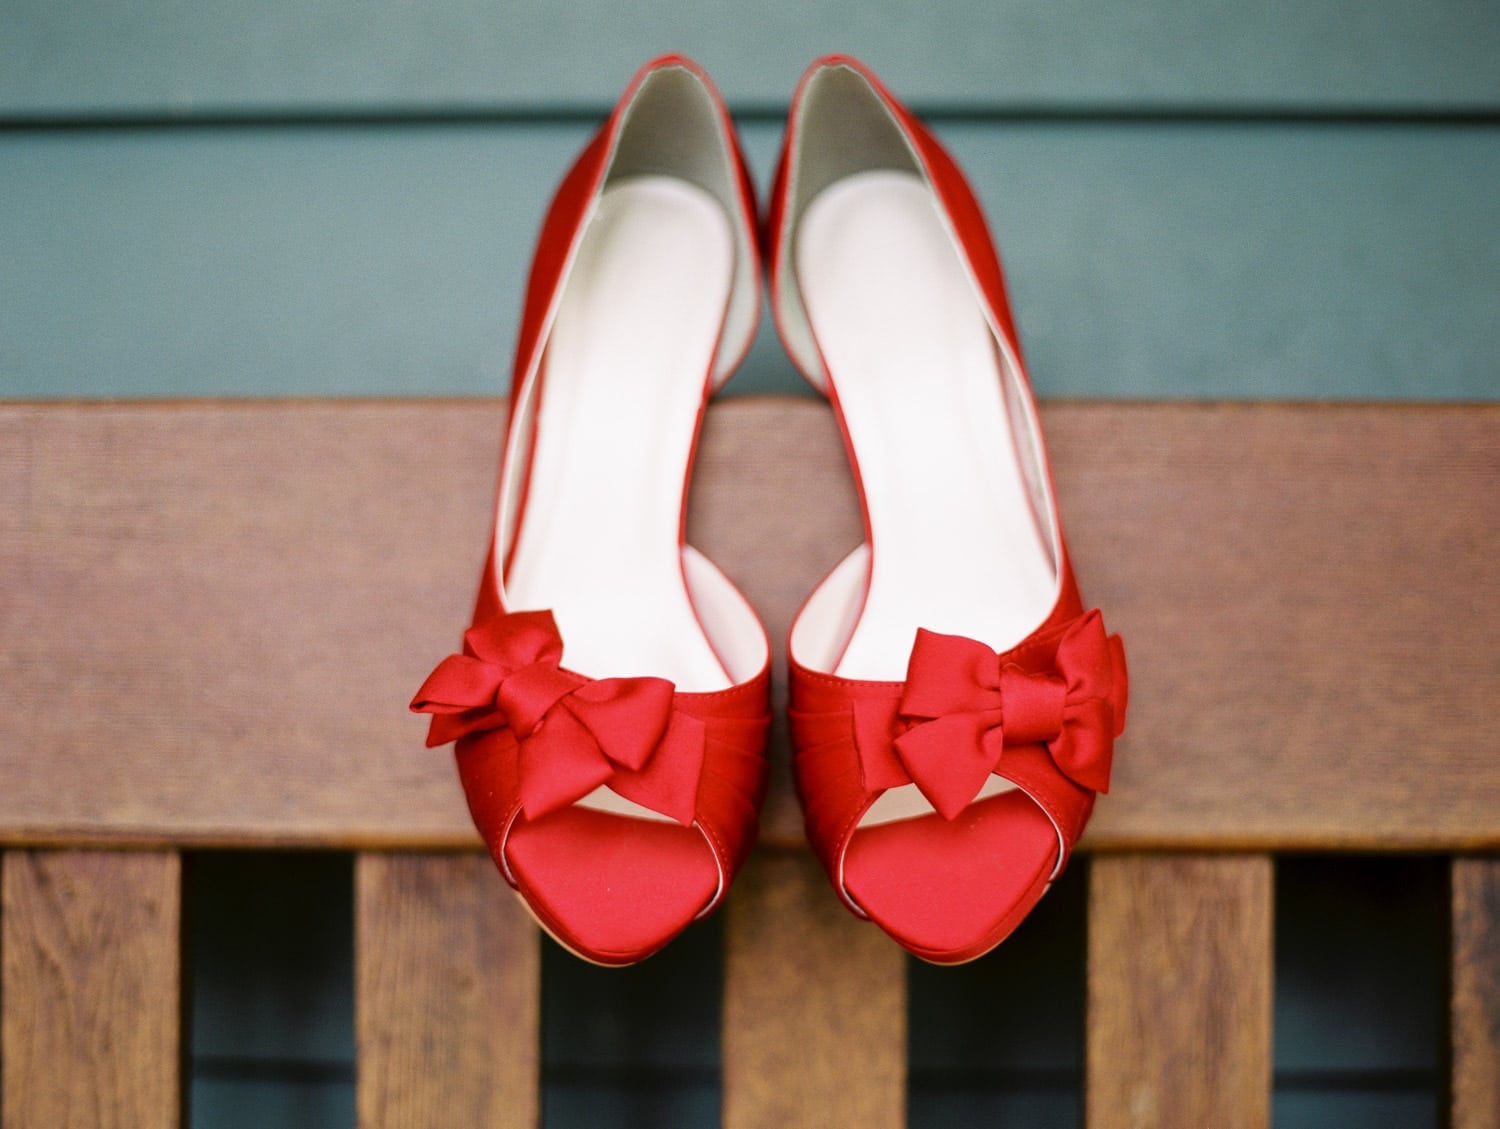 Wedding shoes, Fuji400h | Vancouver wedding photographer